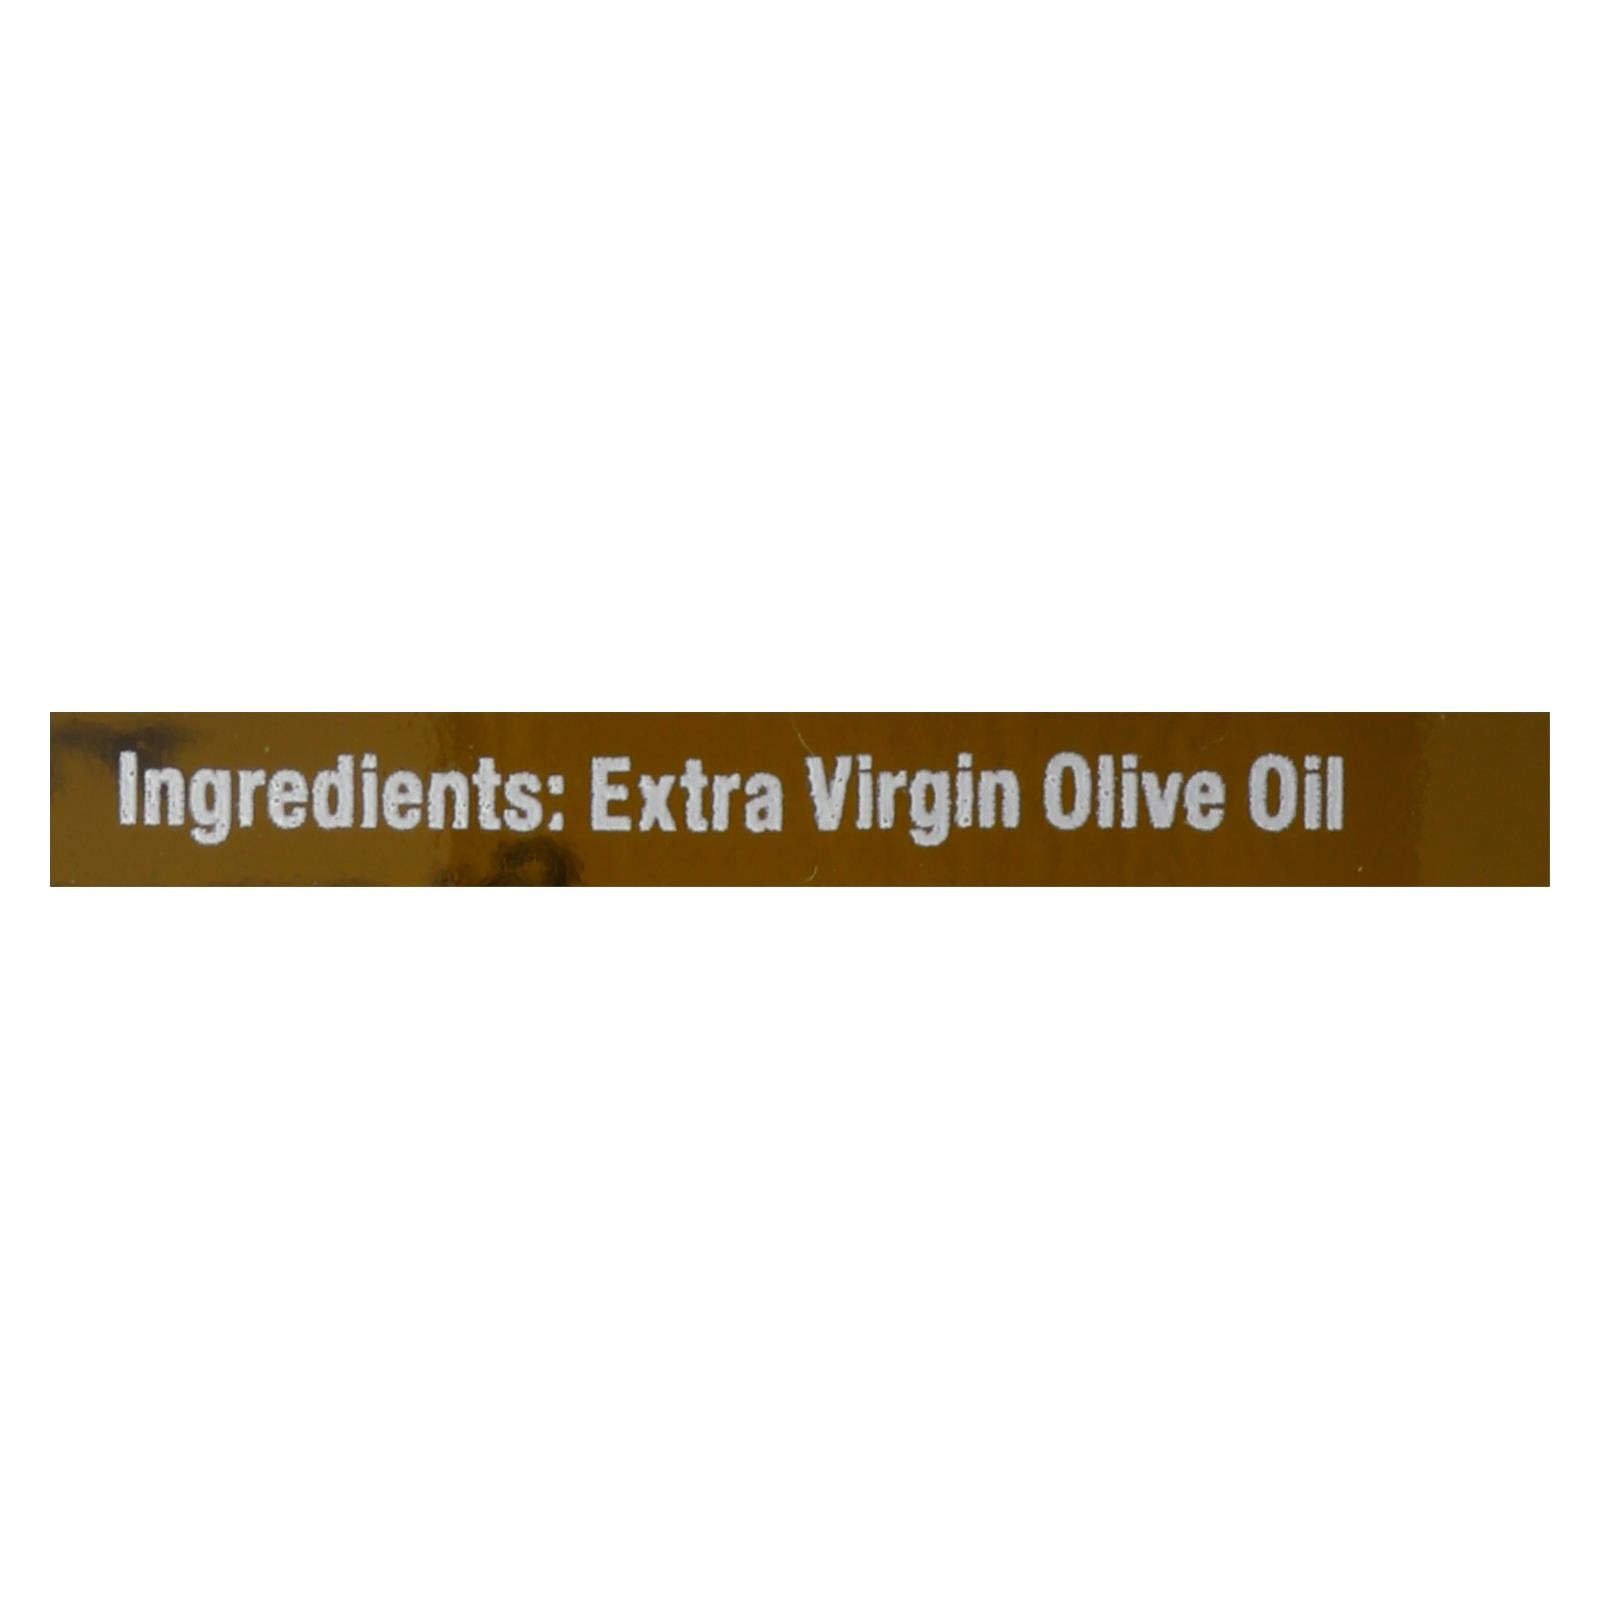 Cobram Estates Extra Virgin Olive Oil - Australia Select - Case Of 6 - 25.4 Fl Oz.